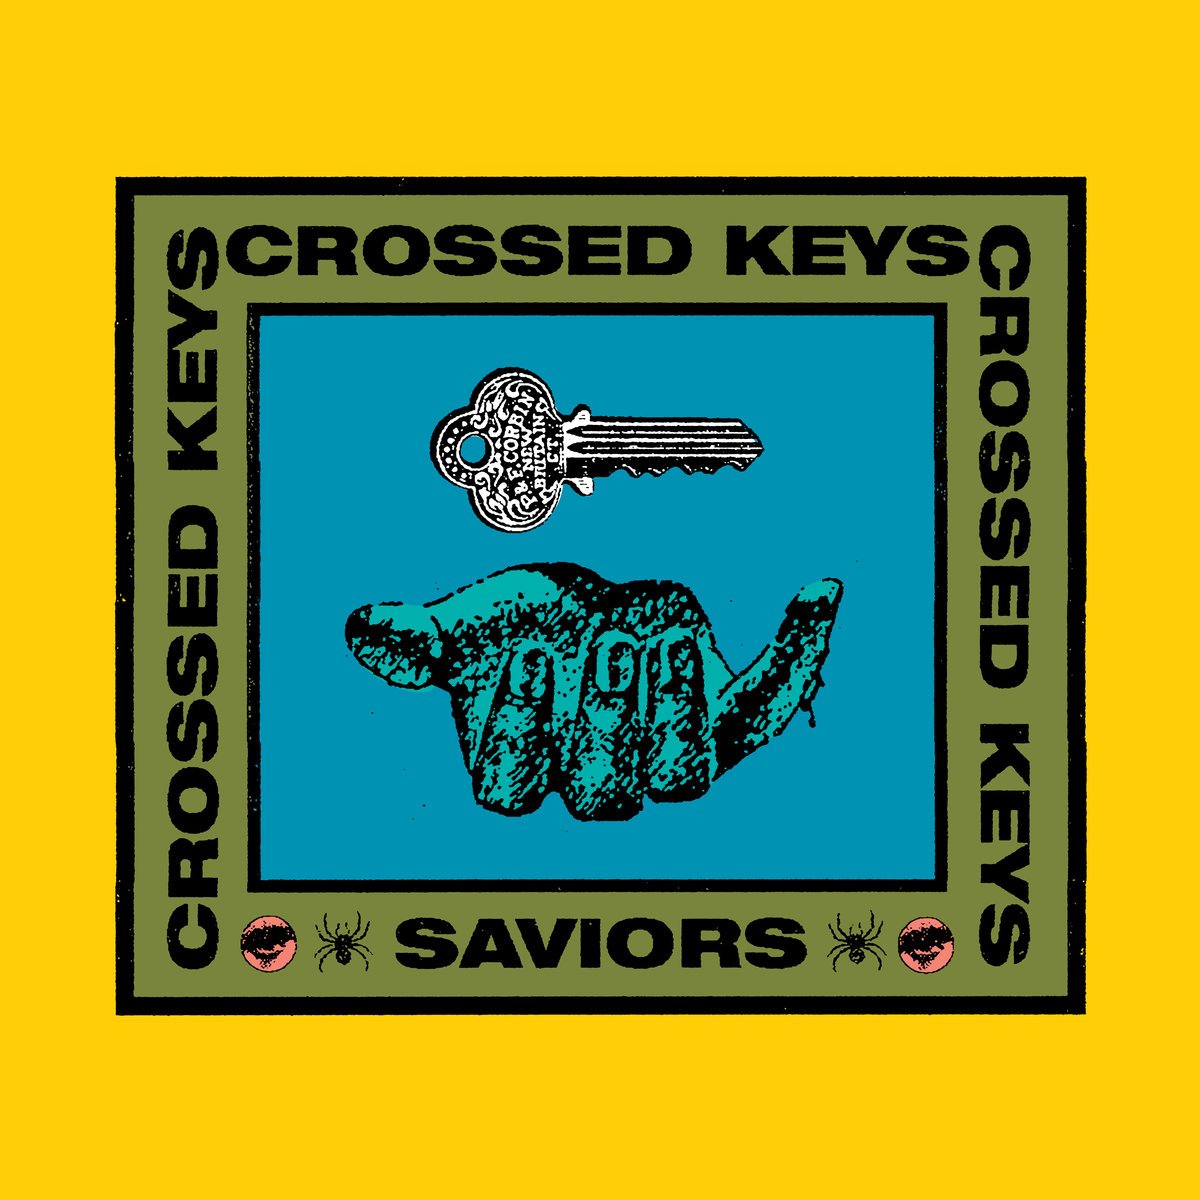 Обложка на песню Crossed out. The Society of Crossed Keys Pin. Everything broke